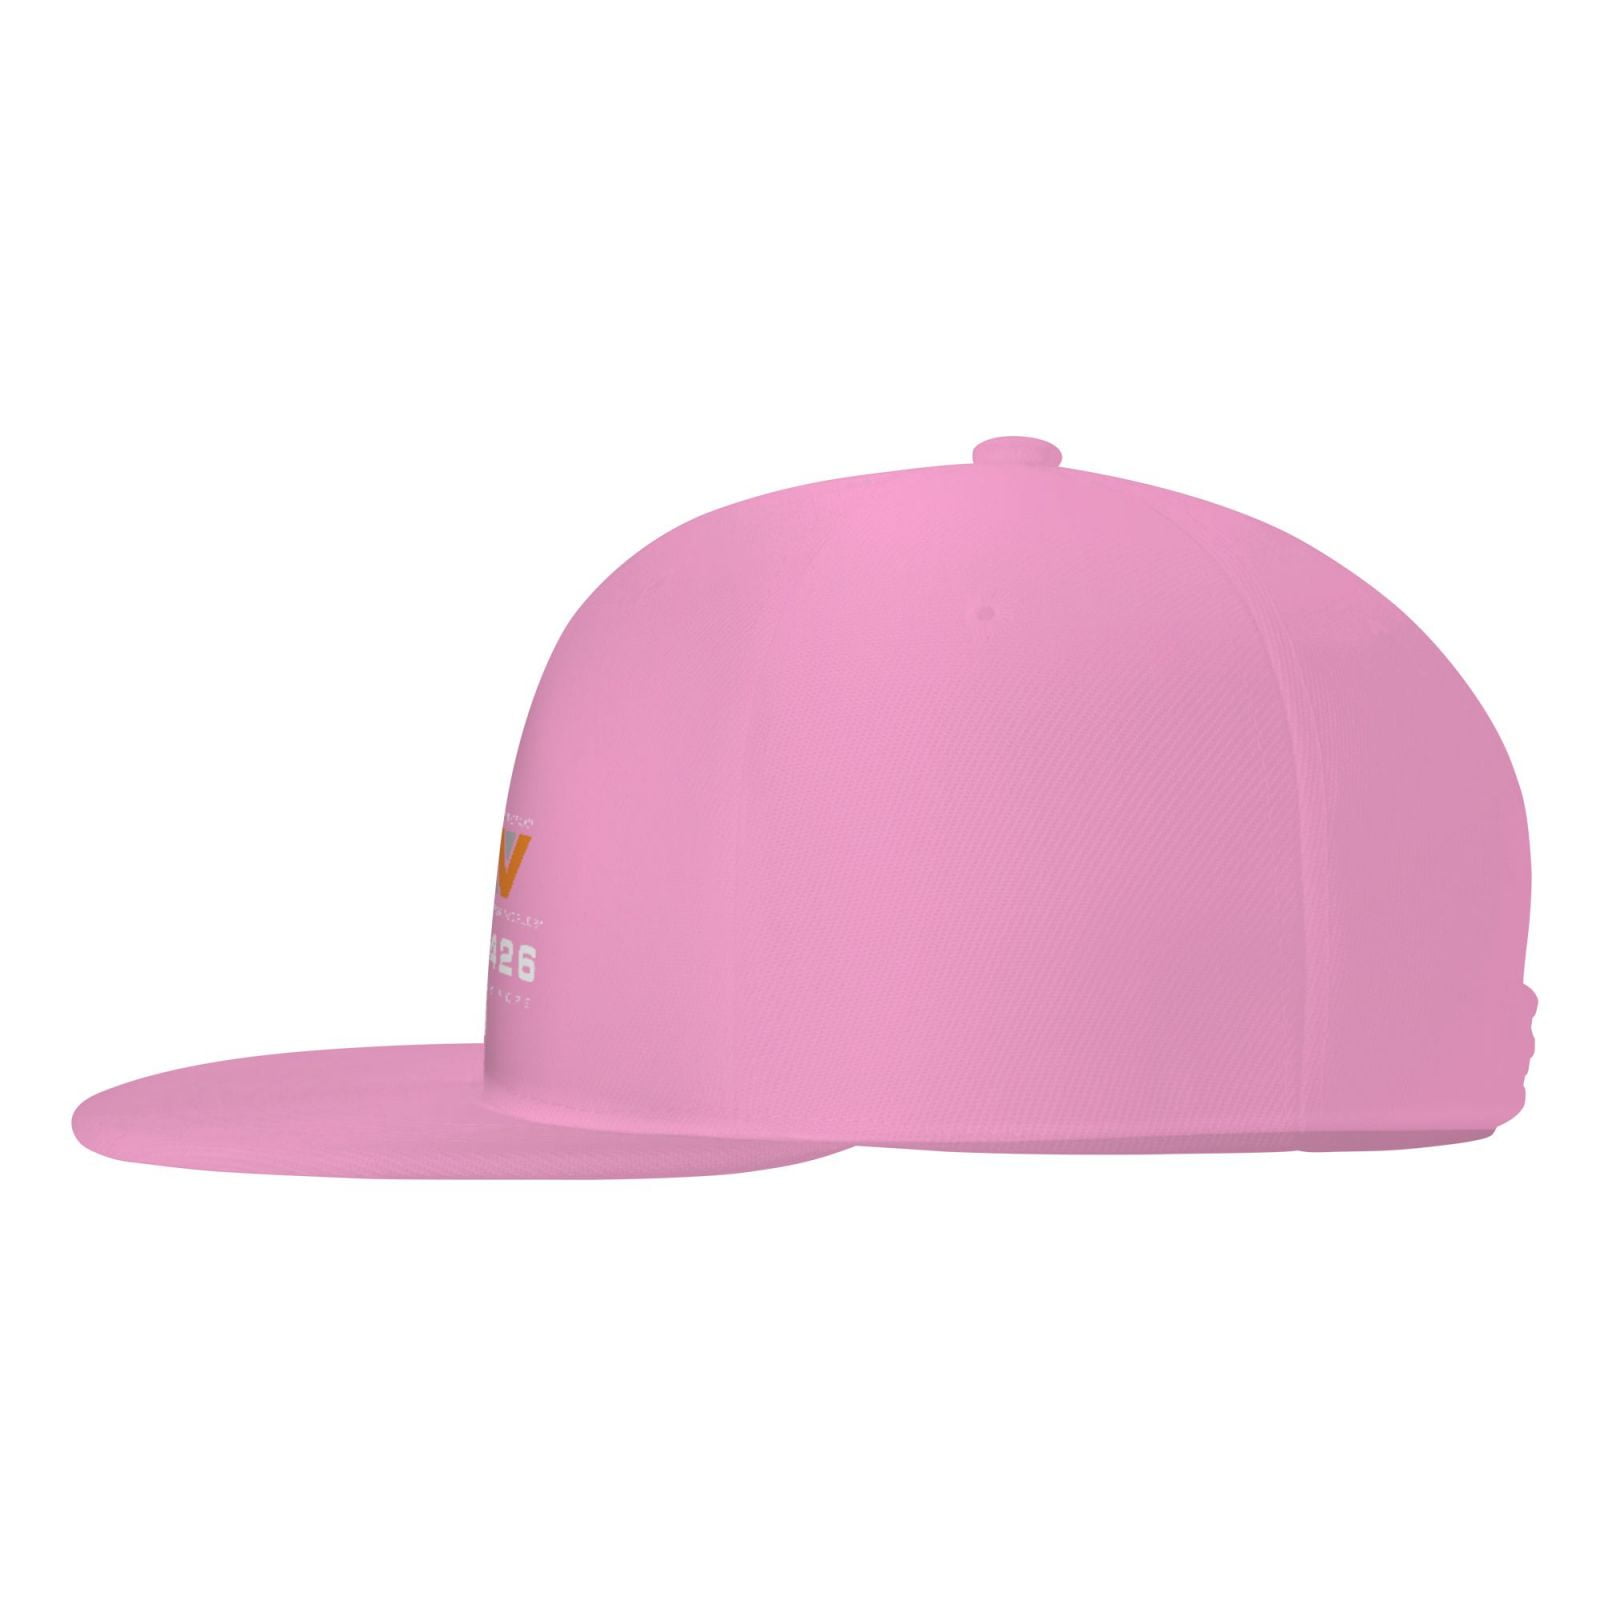 Cepten Men'S & Women Hip Hop Fashion With Aliens Lv-426 Logo Adjustable  Baseball Flat Bill Hat White 